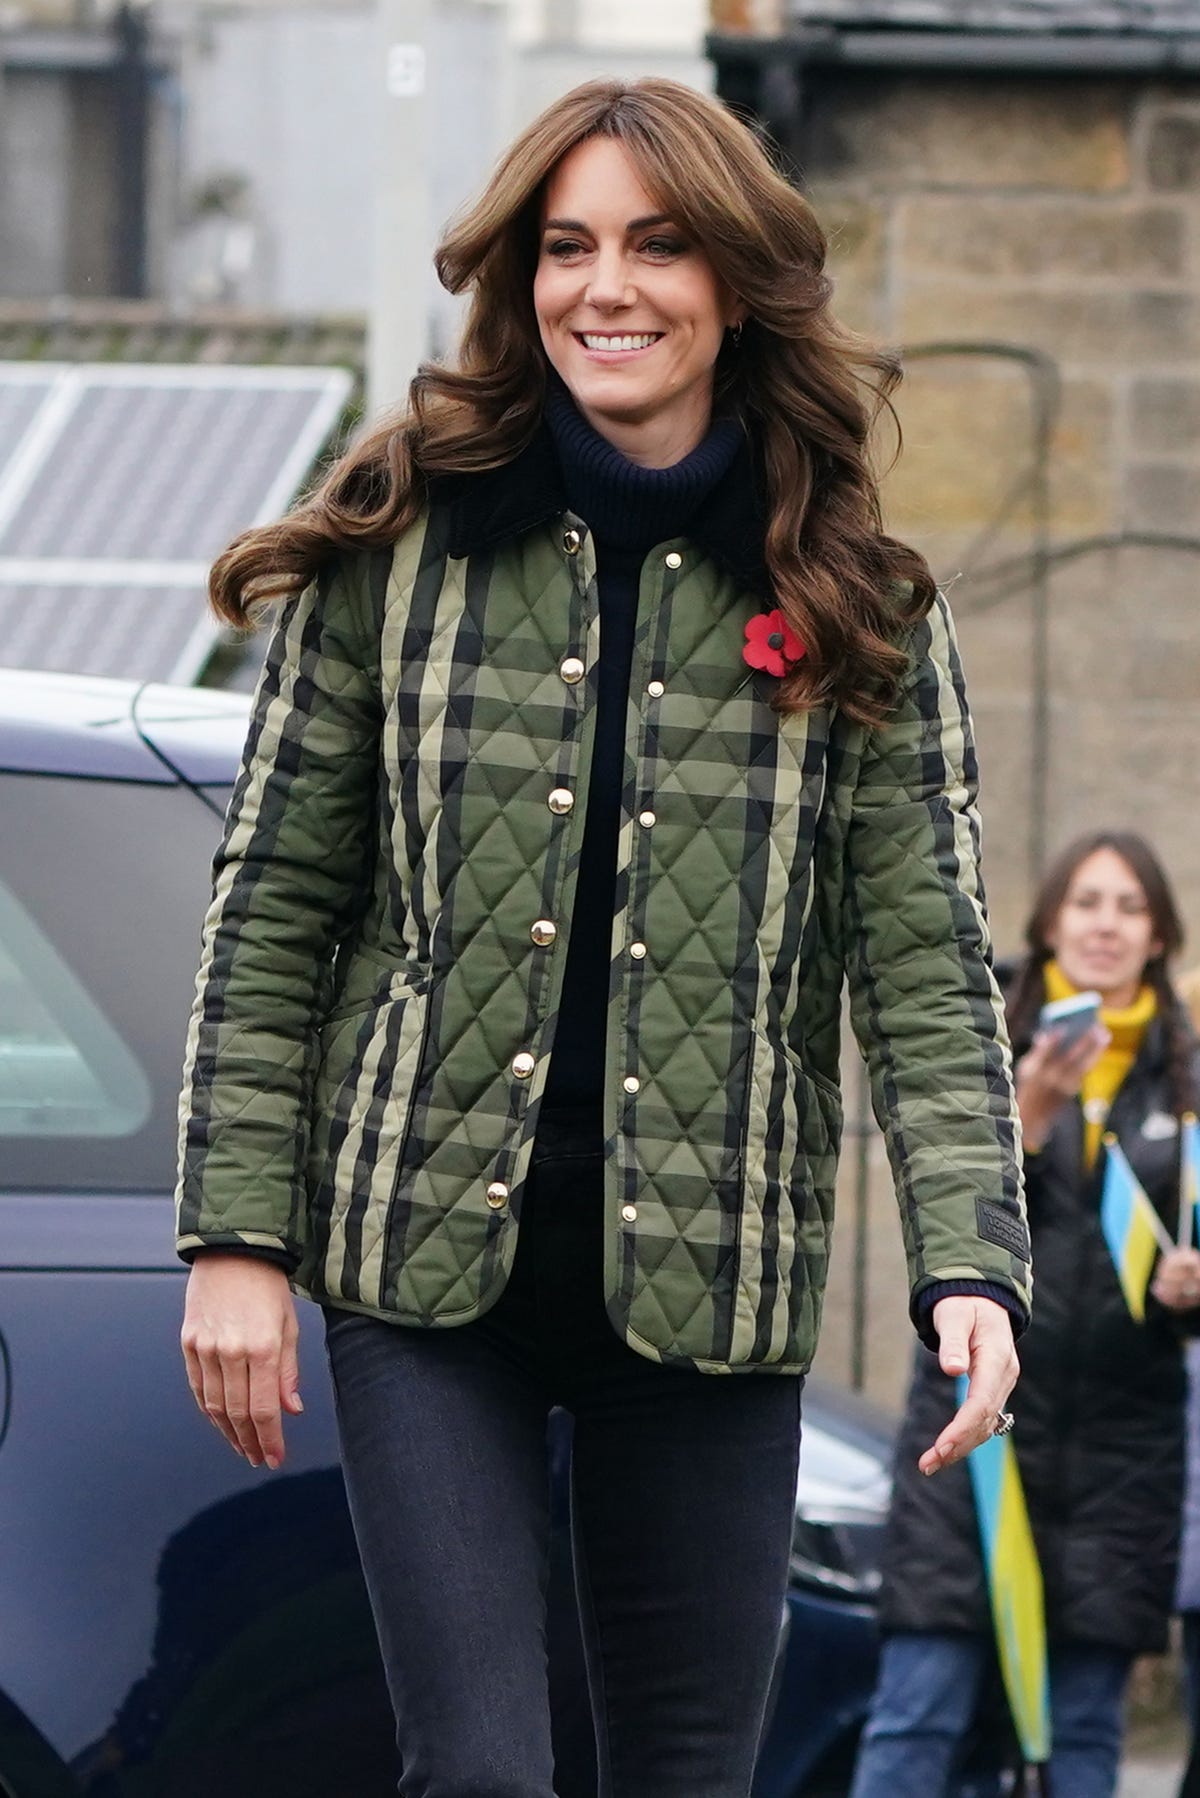 The Princess of Wales wears this season’s trendiest countryside jacket